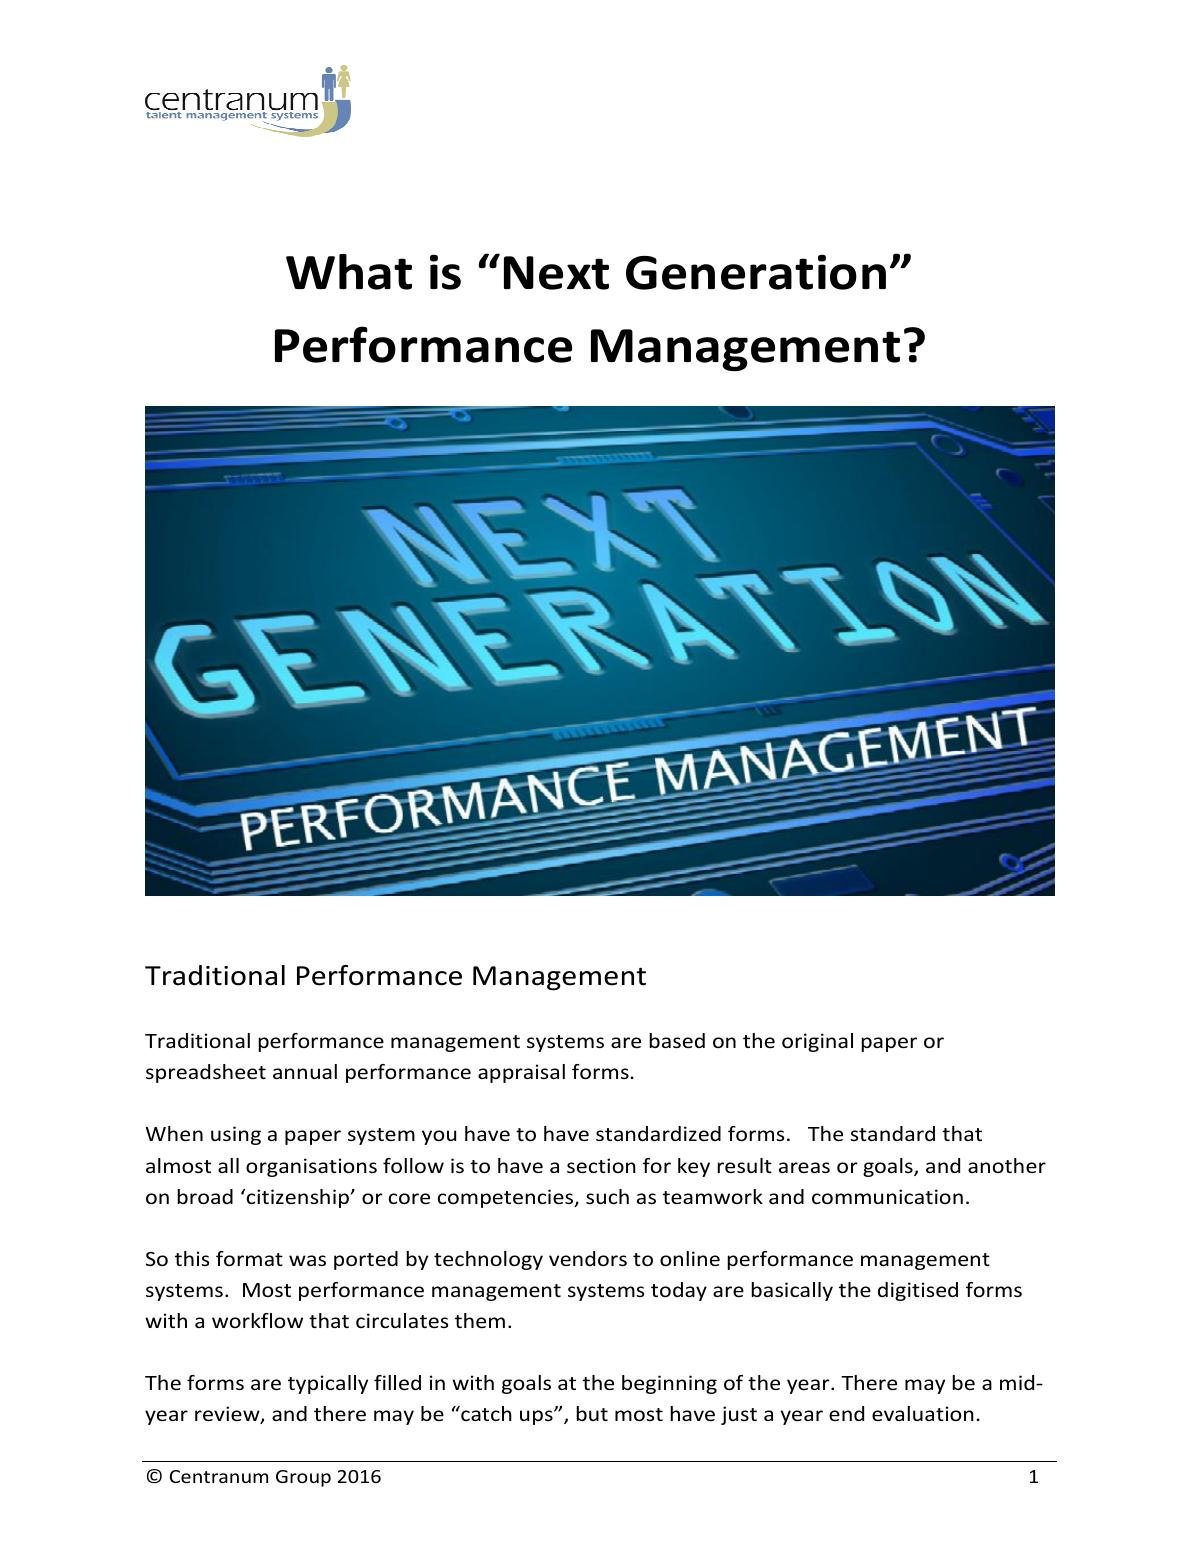 Next Generation Performance Management